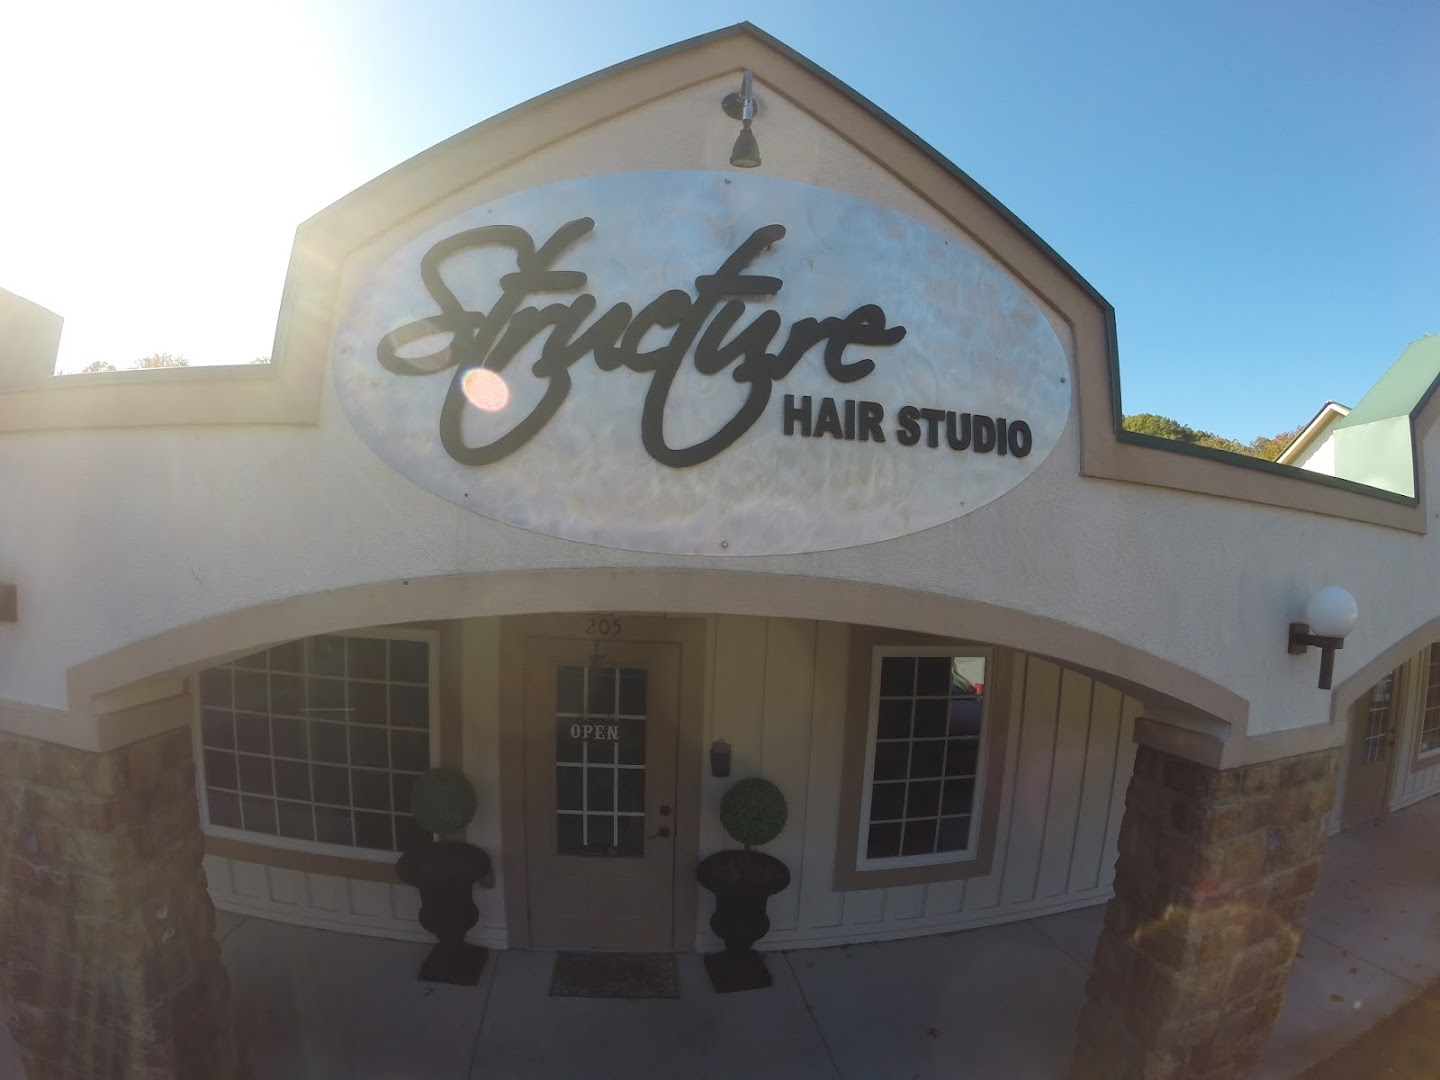 Structure Hair Studio